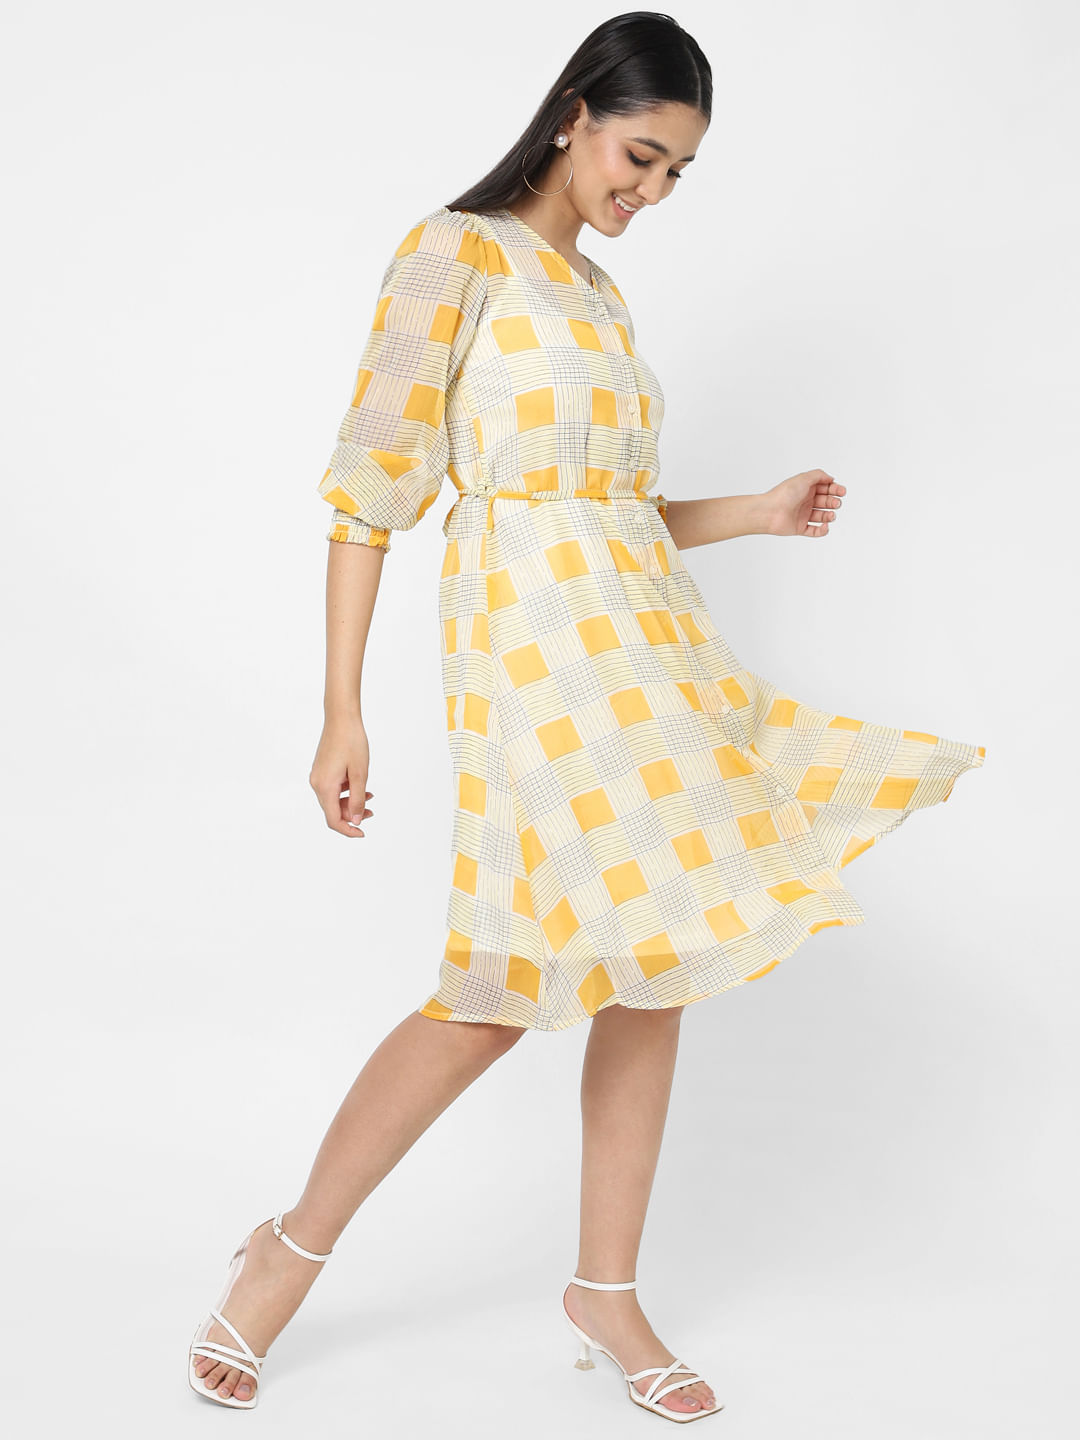 Cute Yellow and White Striped Dress - Wrap Dress - Lulus